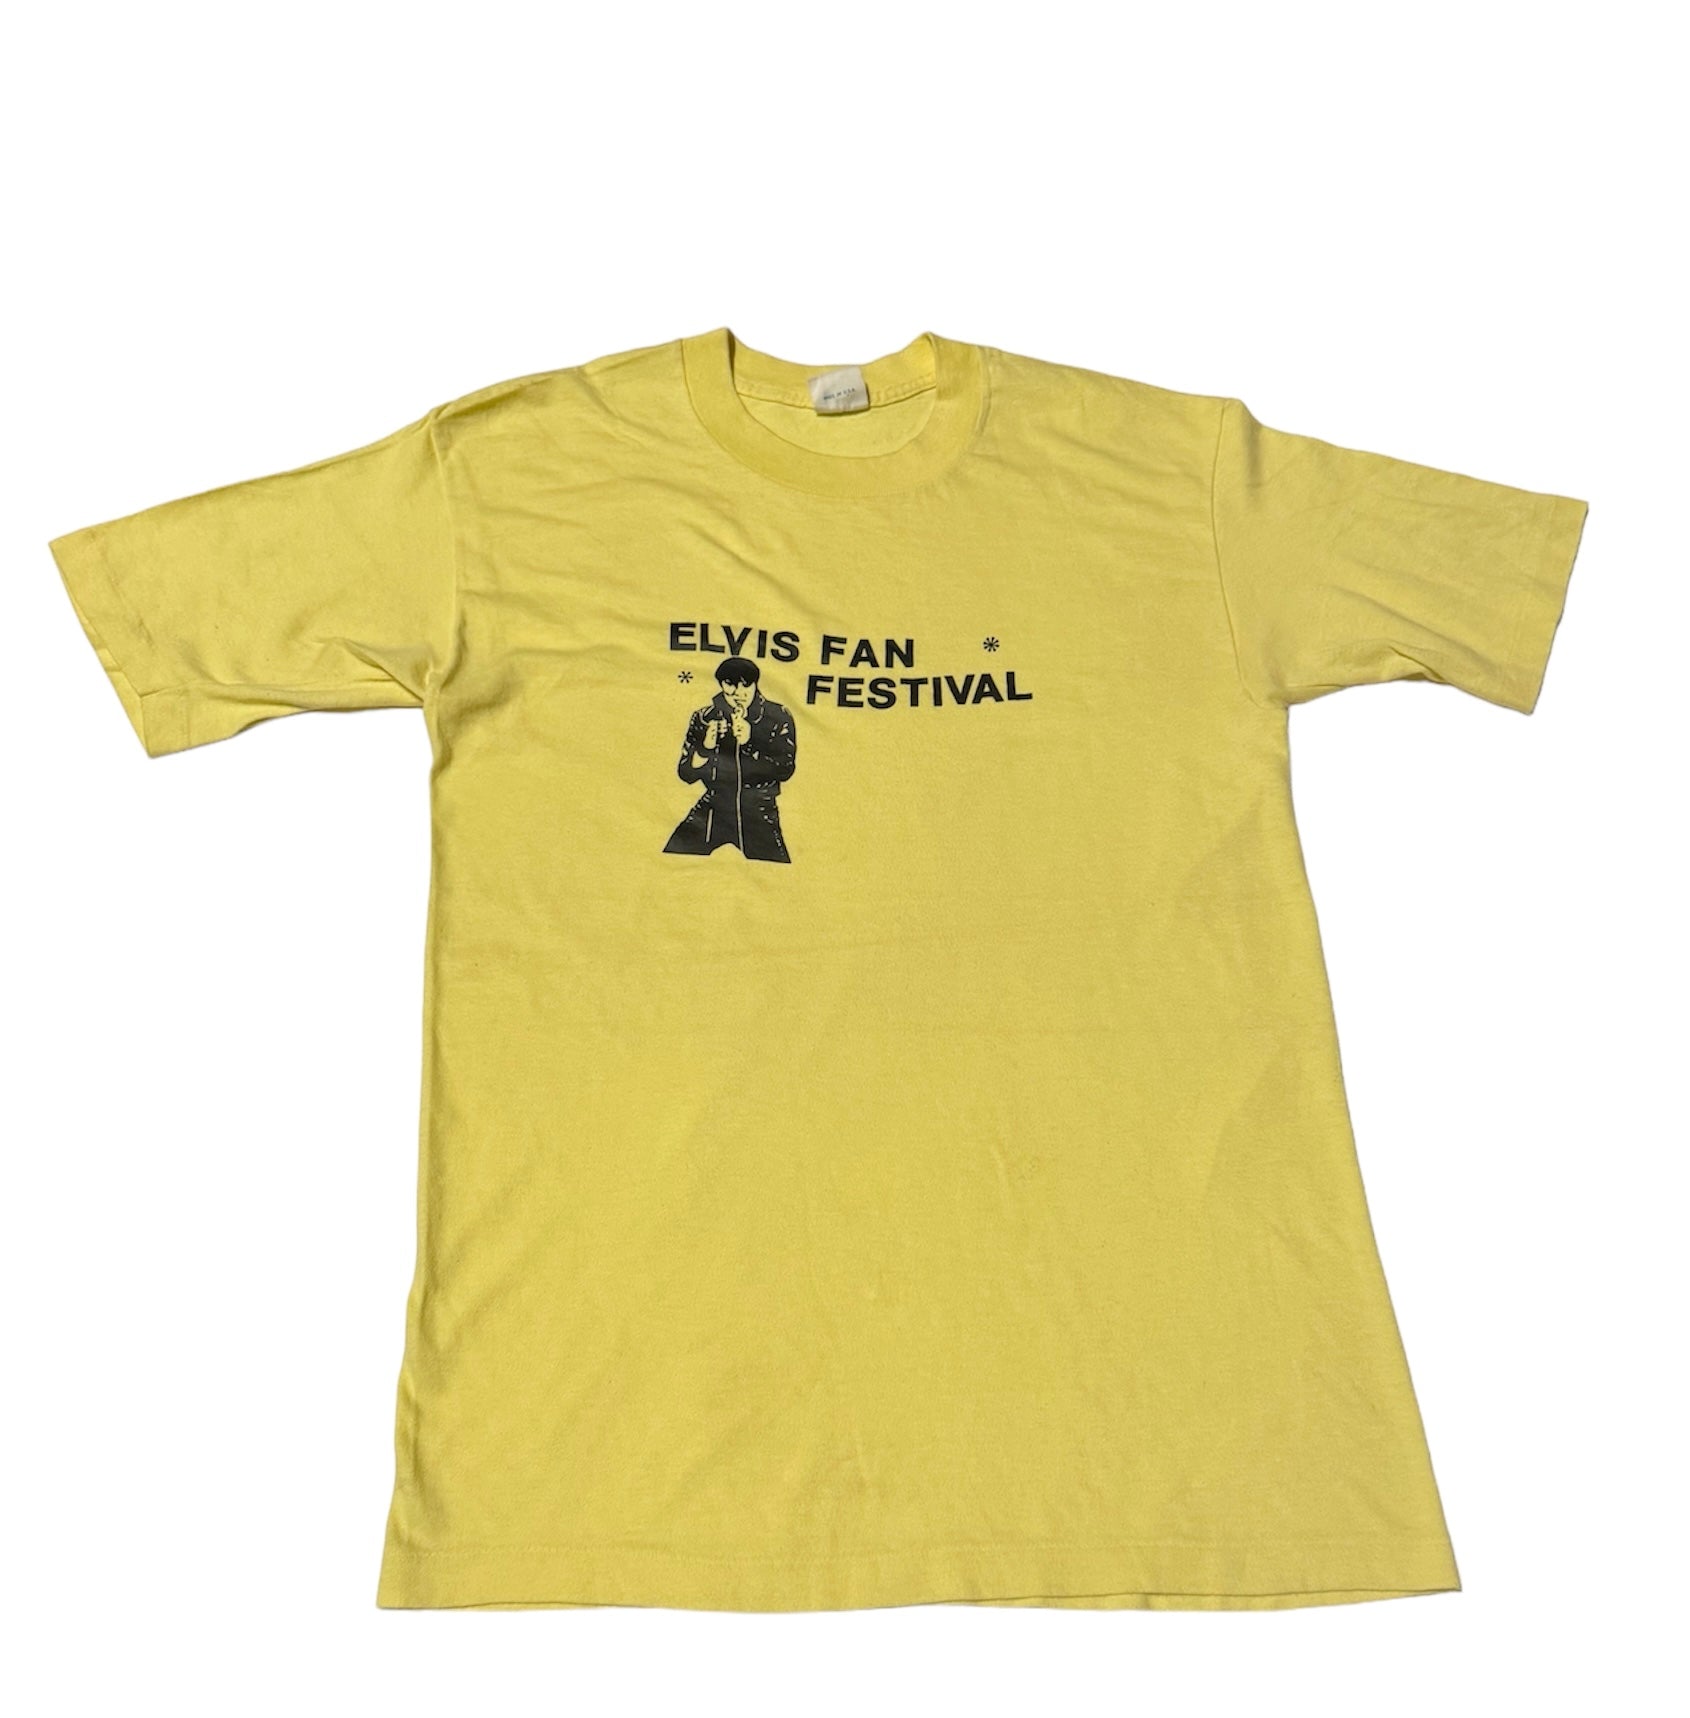 Vintage Elvis Fan Festival Yellow T-shirt (S-M)